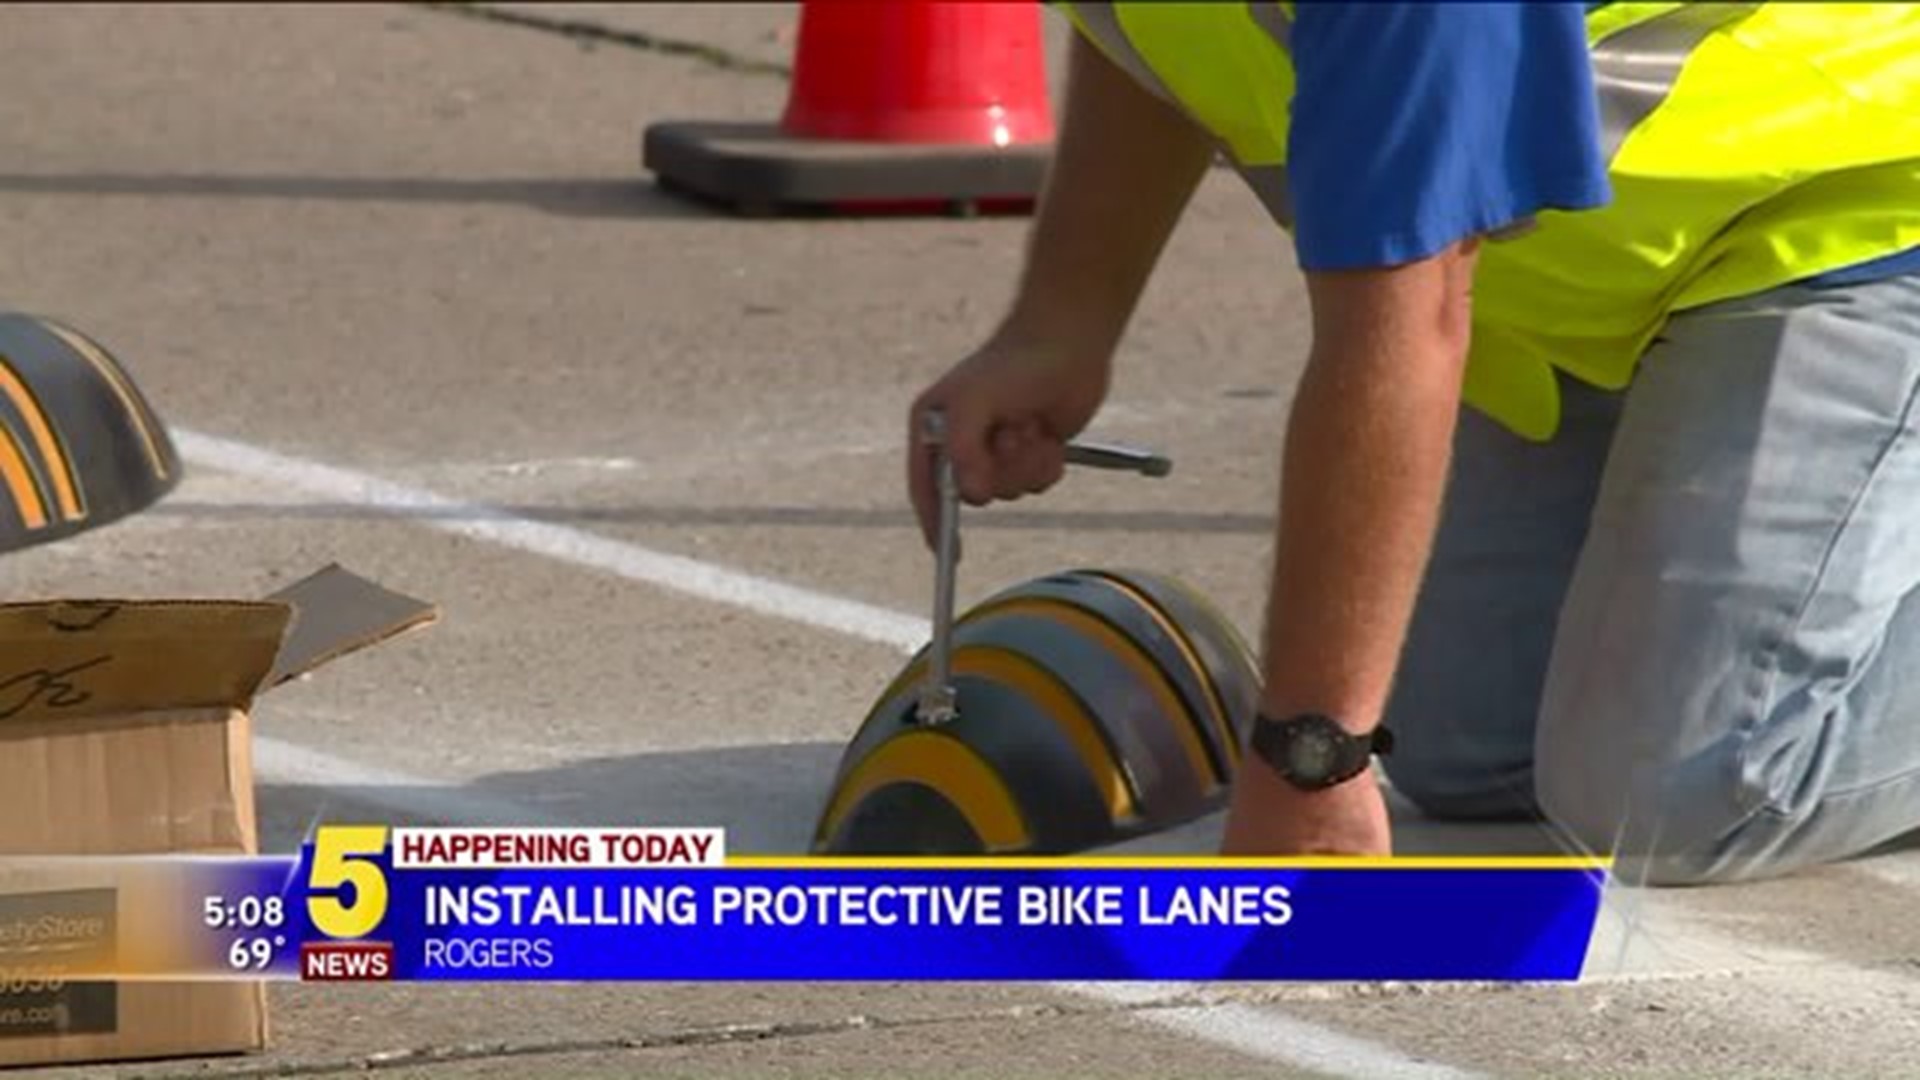 Roger Protective Bike Lanes